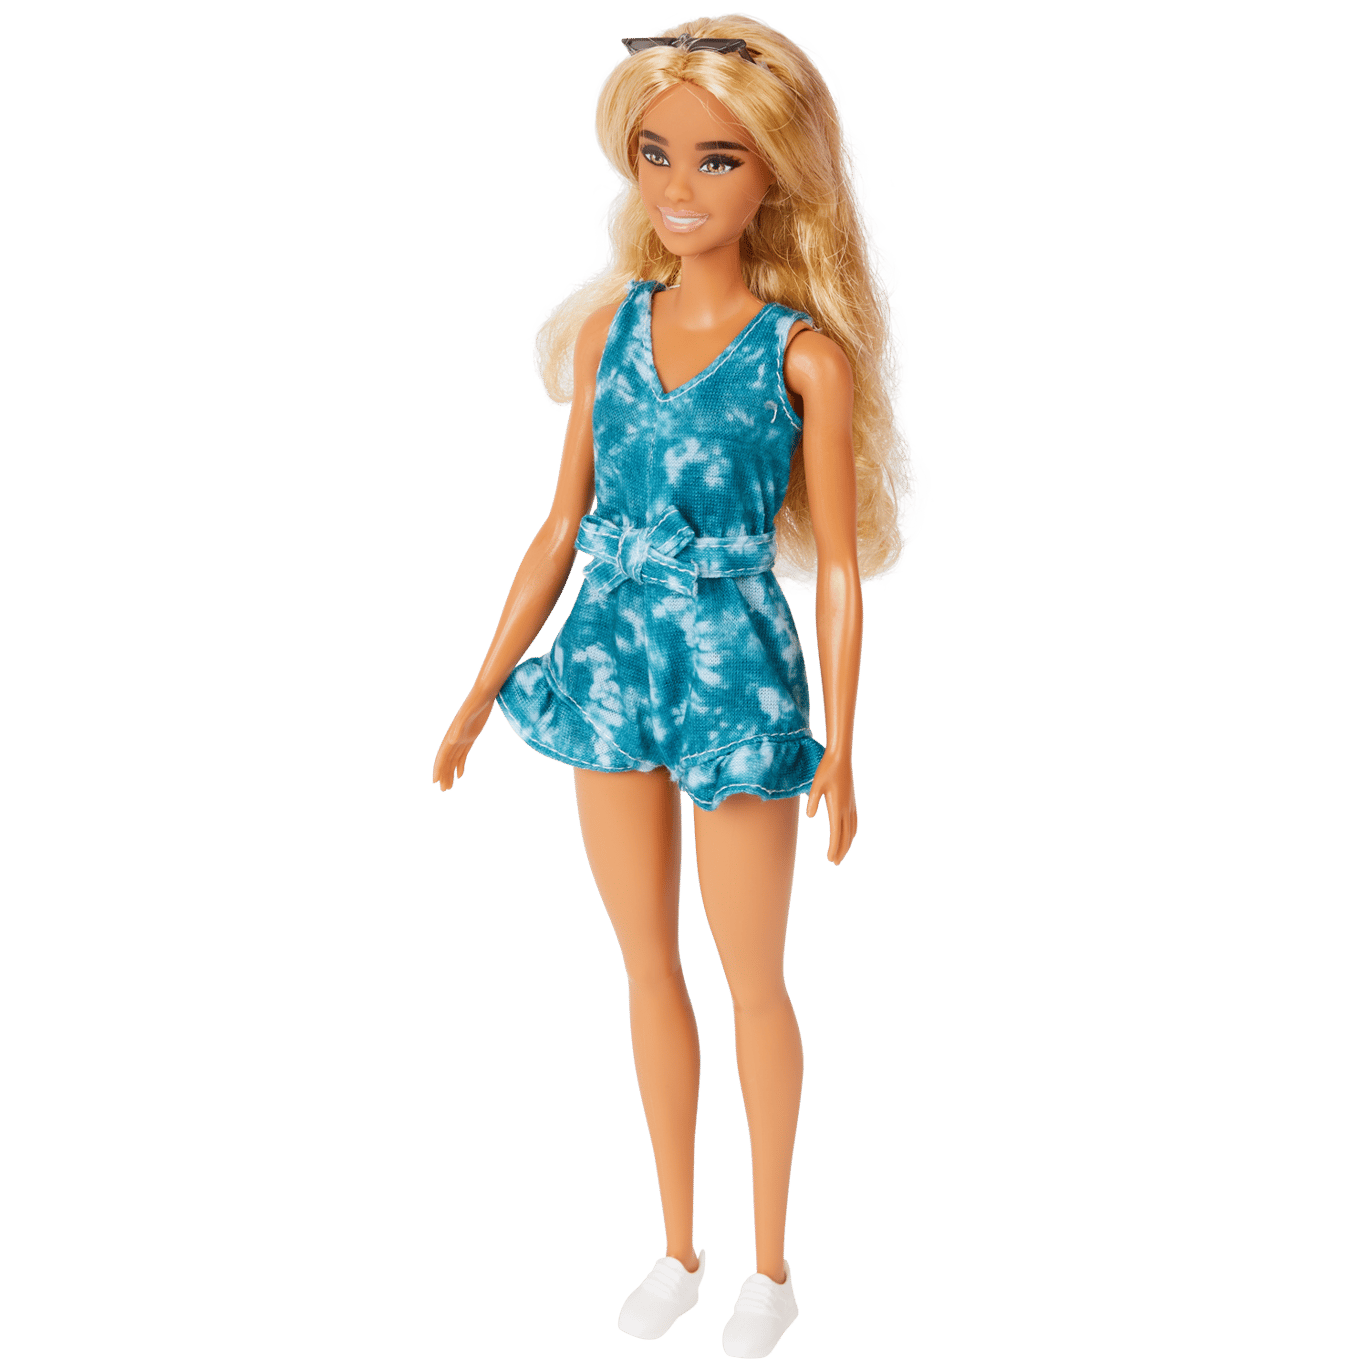 Email Wiens Reusachtig Barbie Fashionista | Action.com